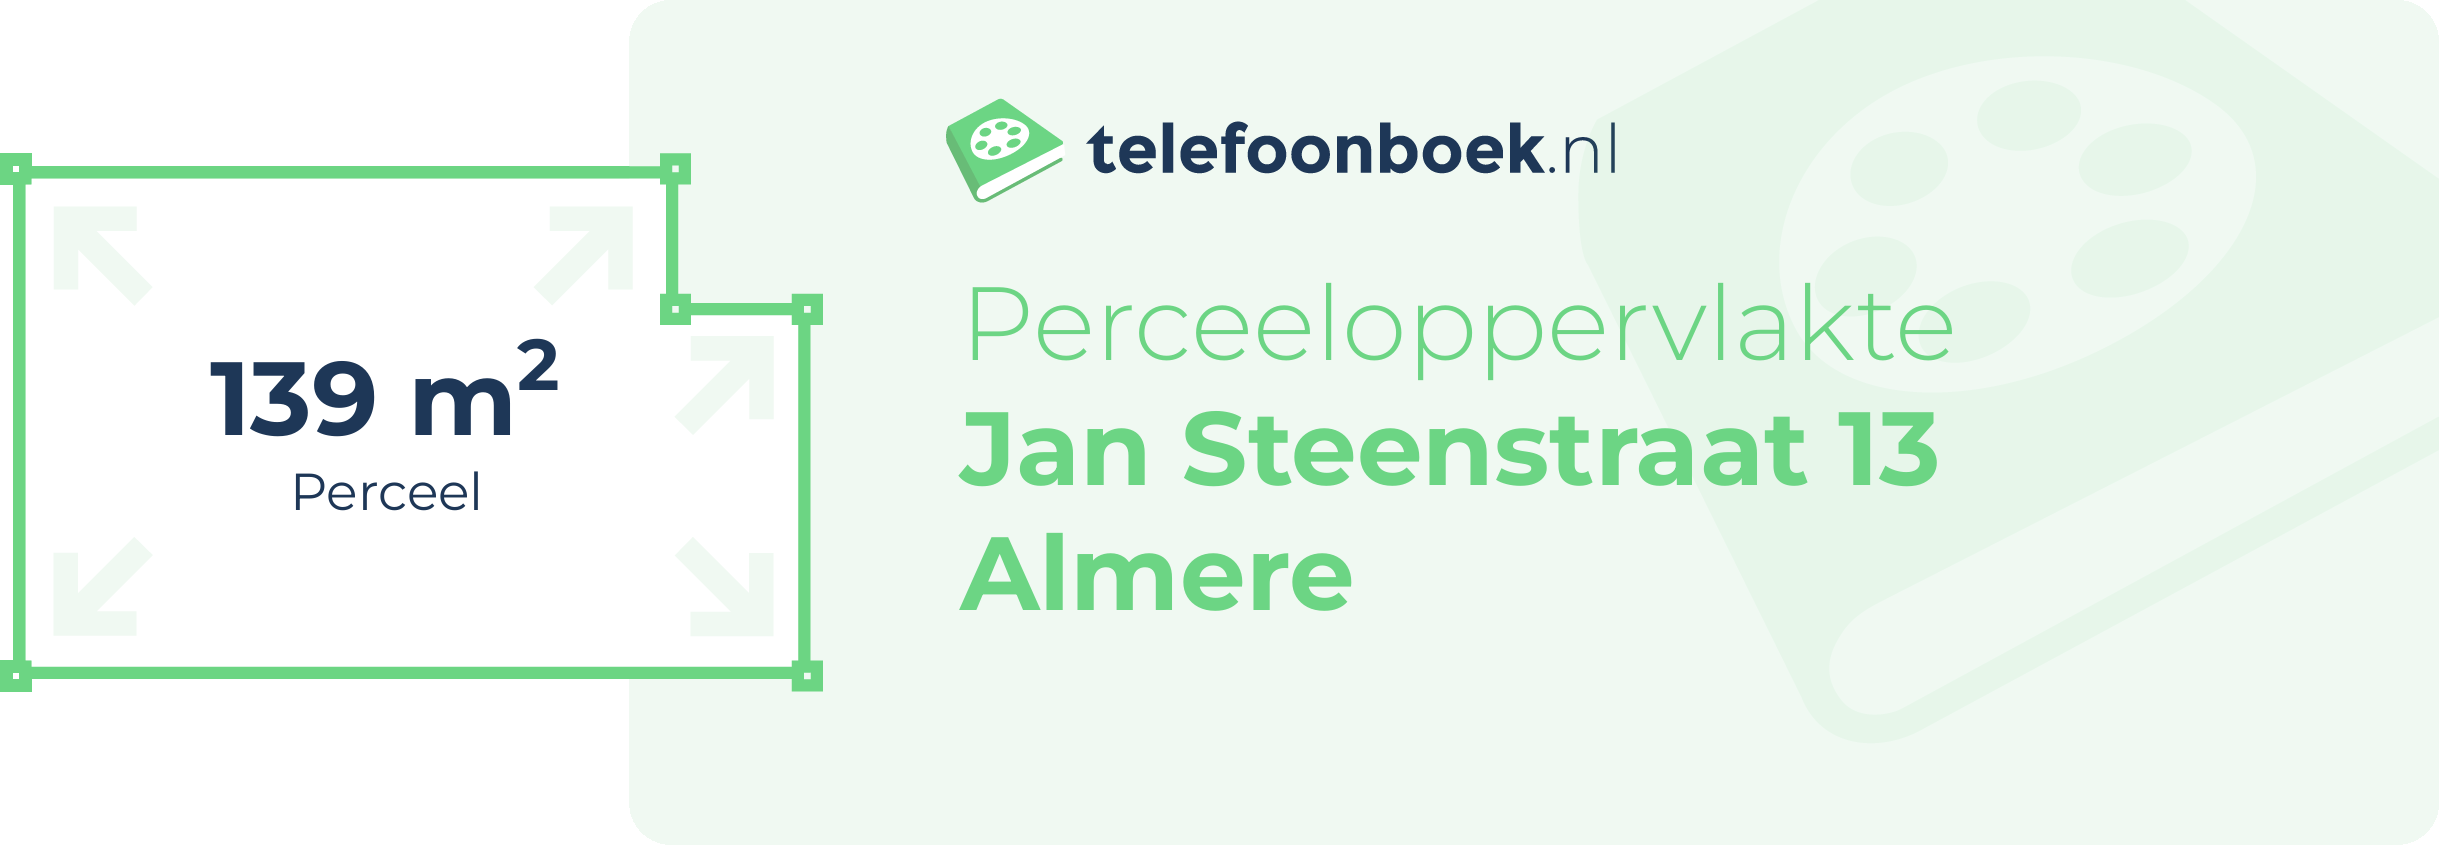 Perceeloppervlakte Jan Steenstraat 13 Almere